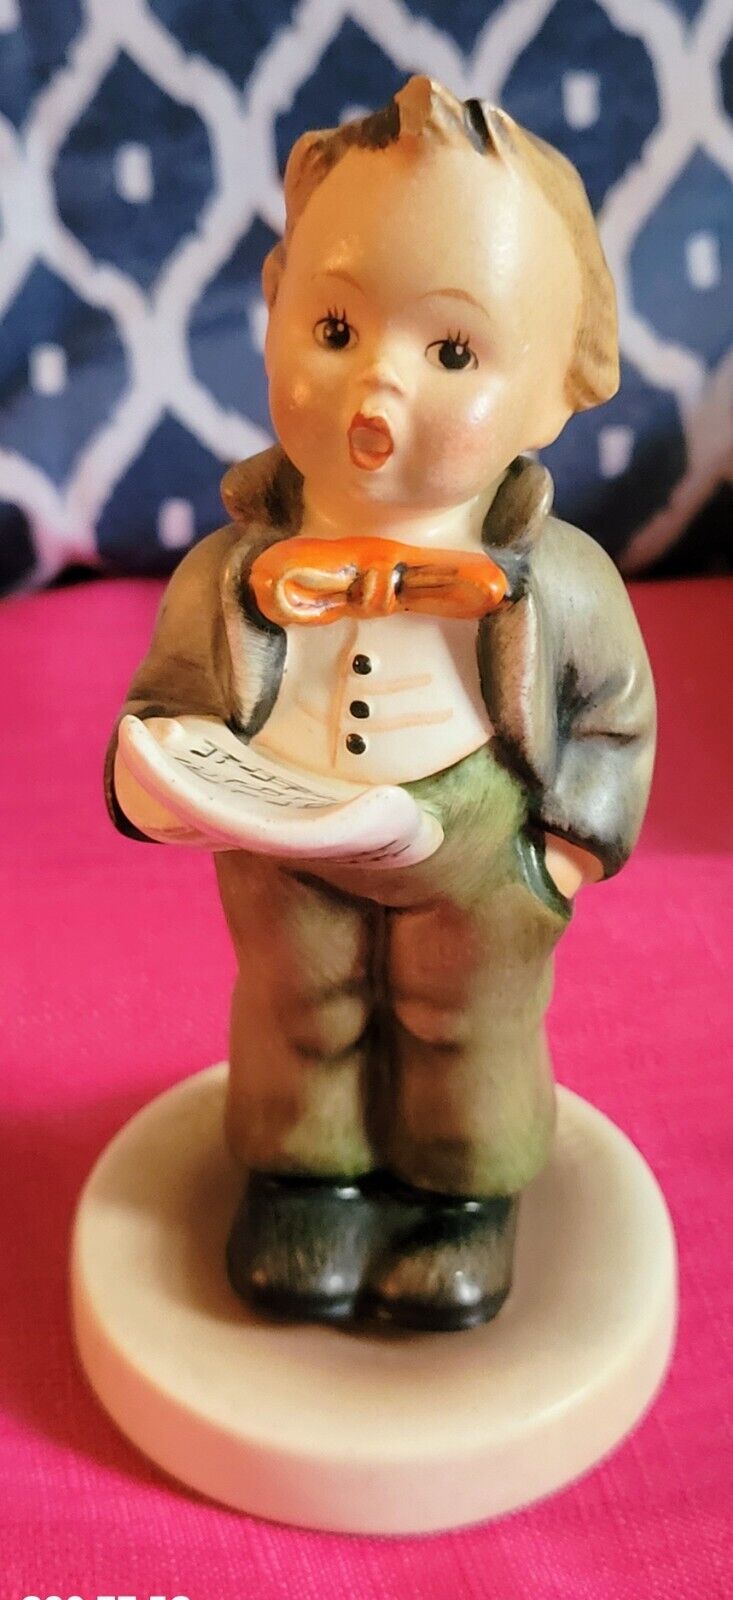  Vintage Hummel Soloist Figurine HUM - 135 By Goebel TMK boy singing choir